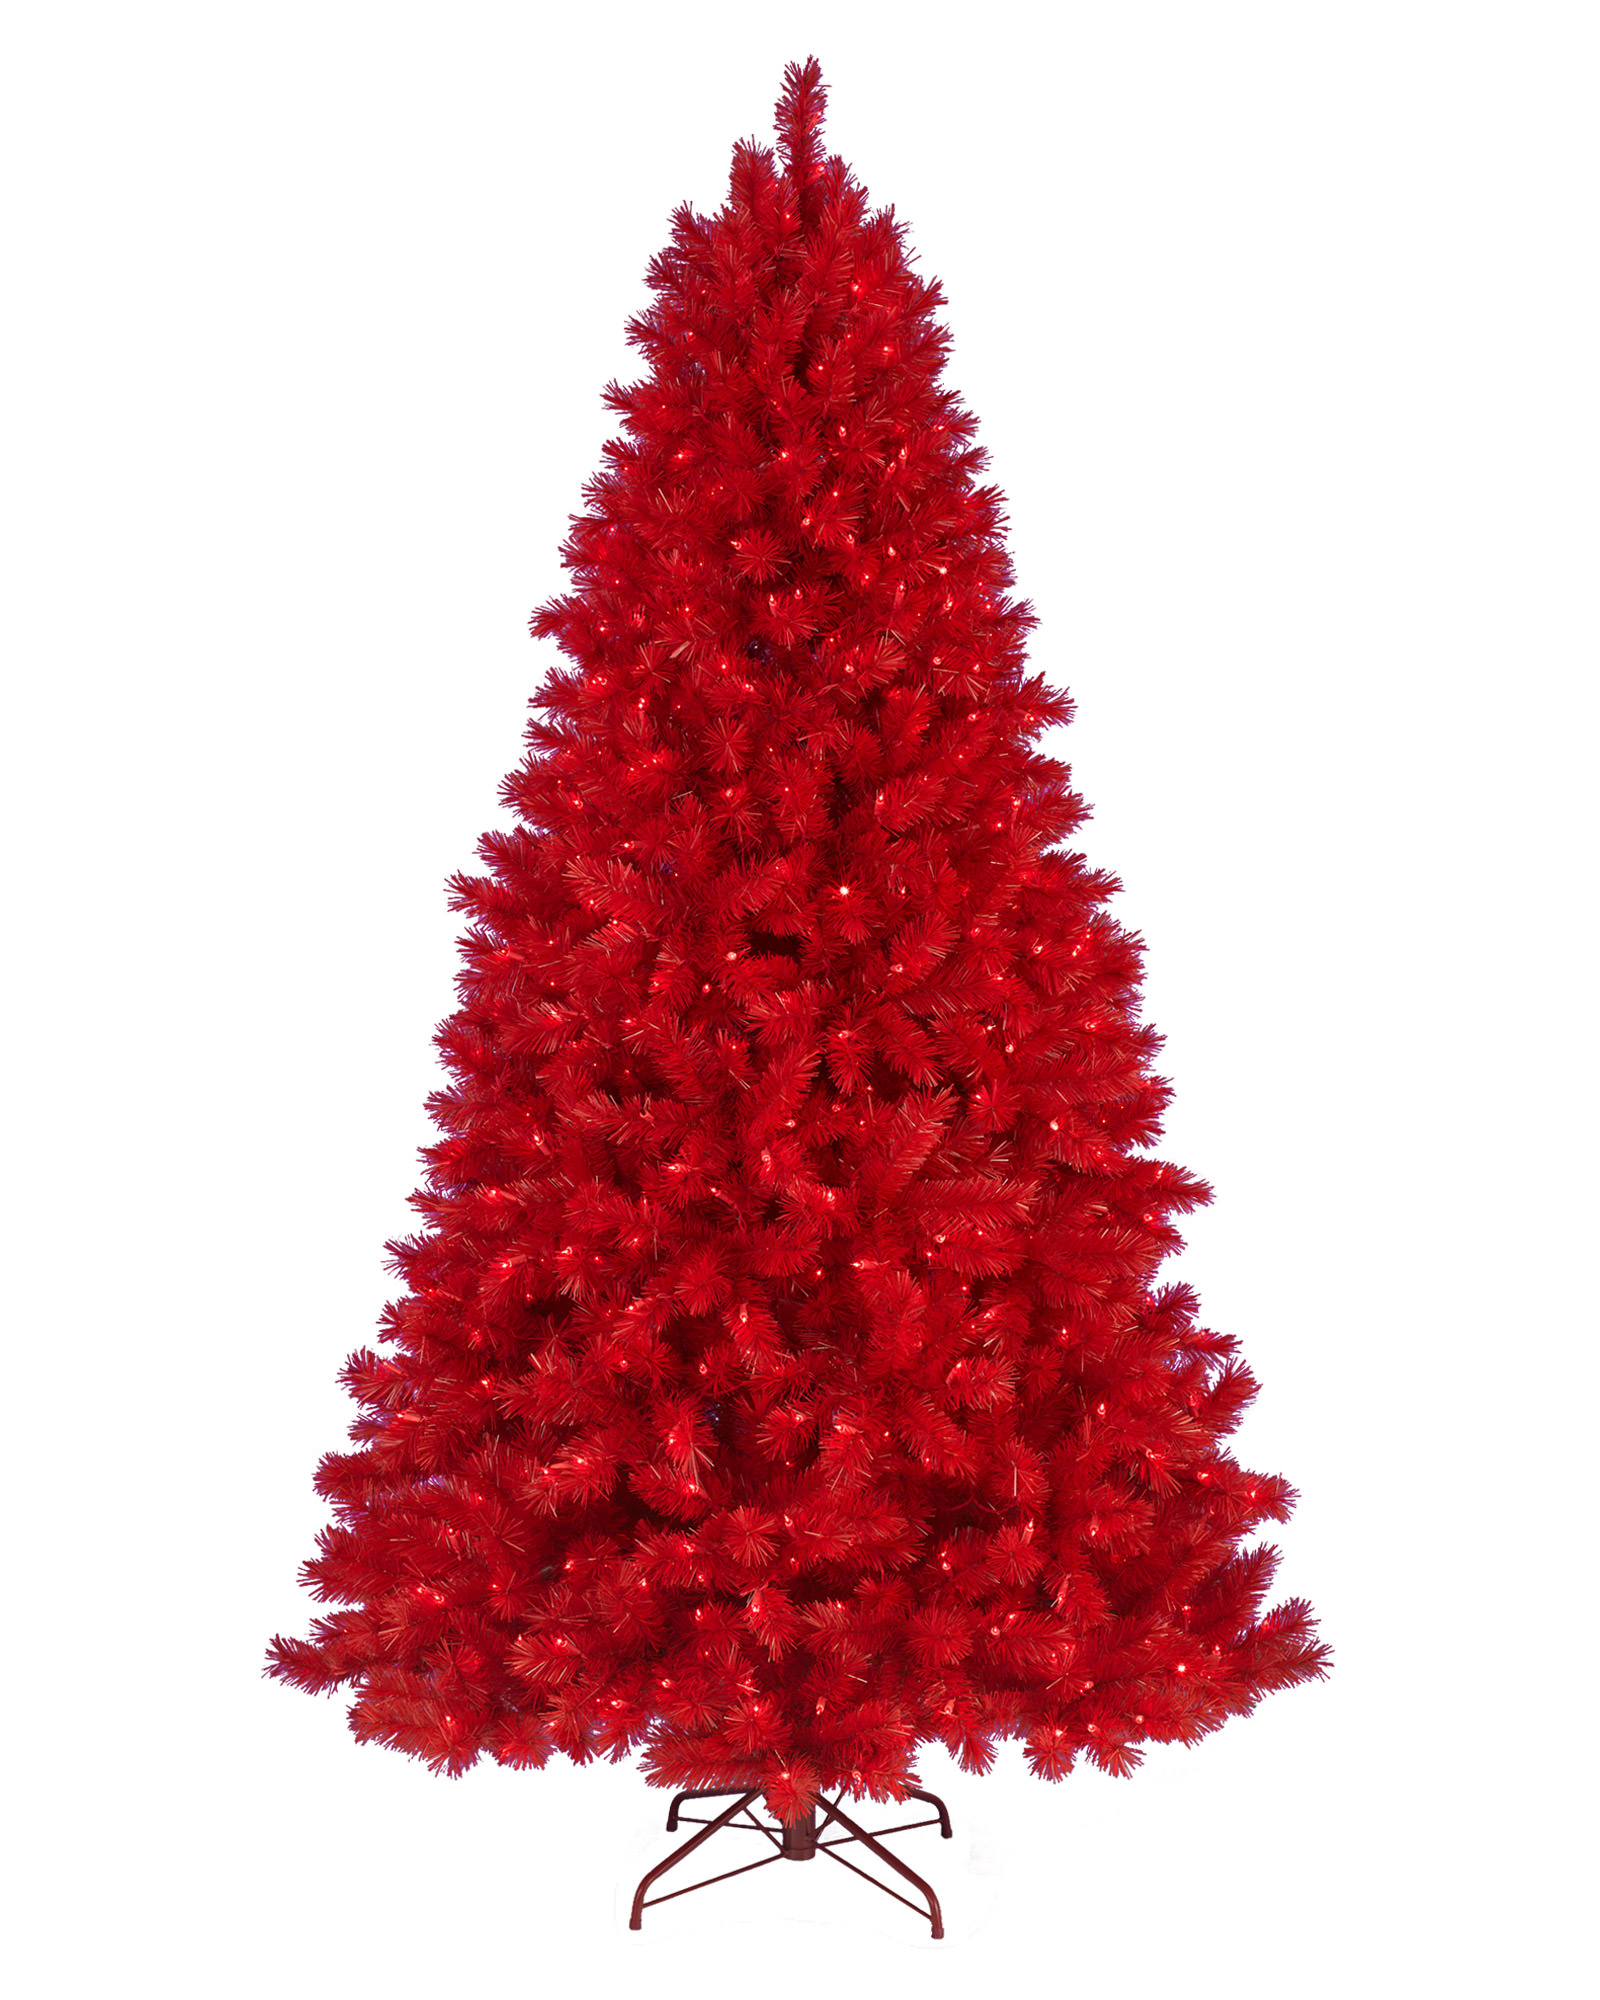 Lipstick Red Artificial Christmas Tree | Treetopia